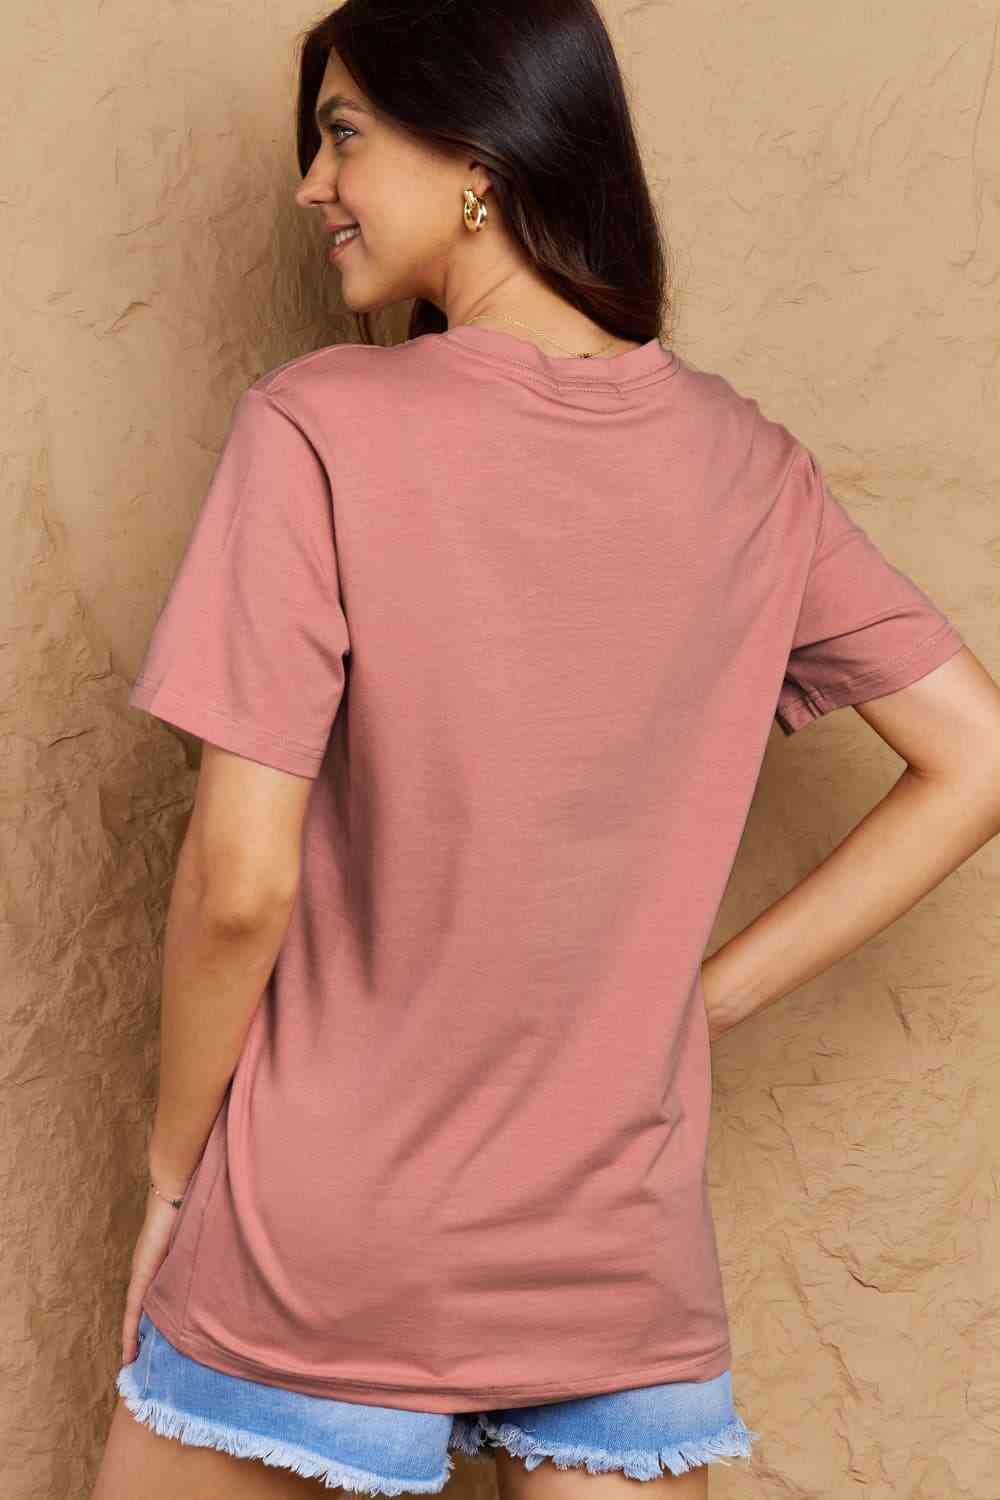 Simply Love Full Size WILD SOUL Graphic Cotton T-Shirt - TRENDMELO